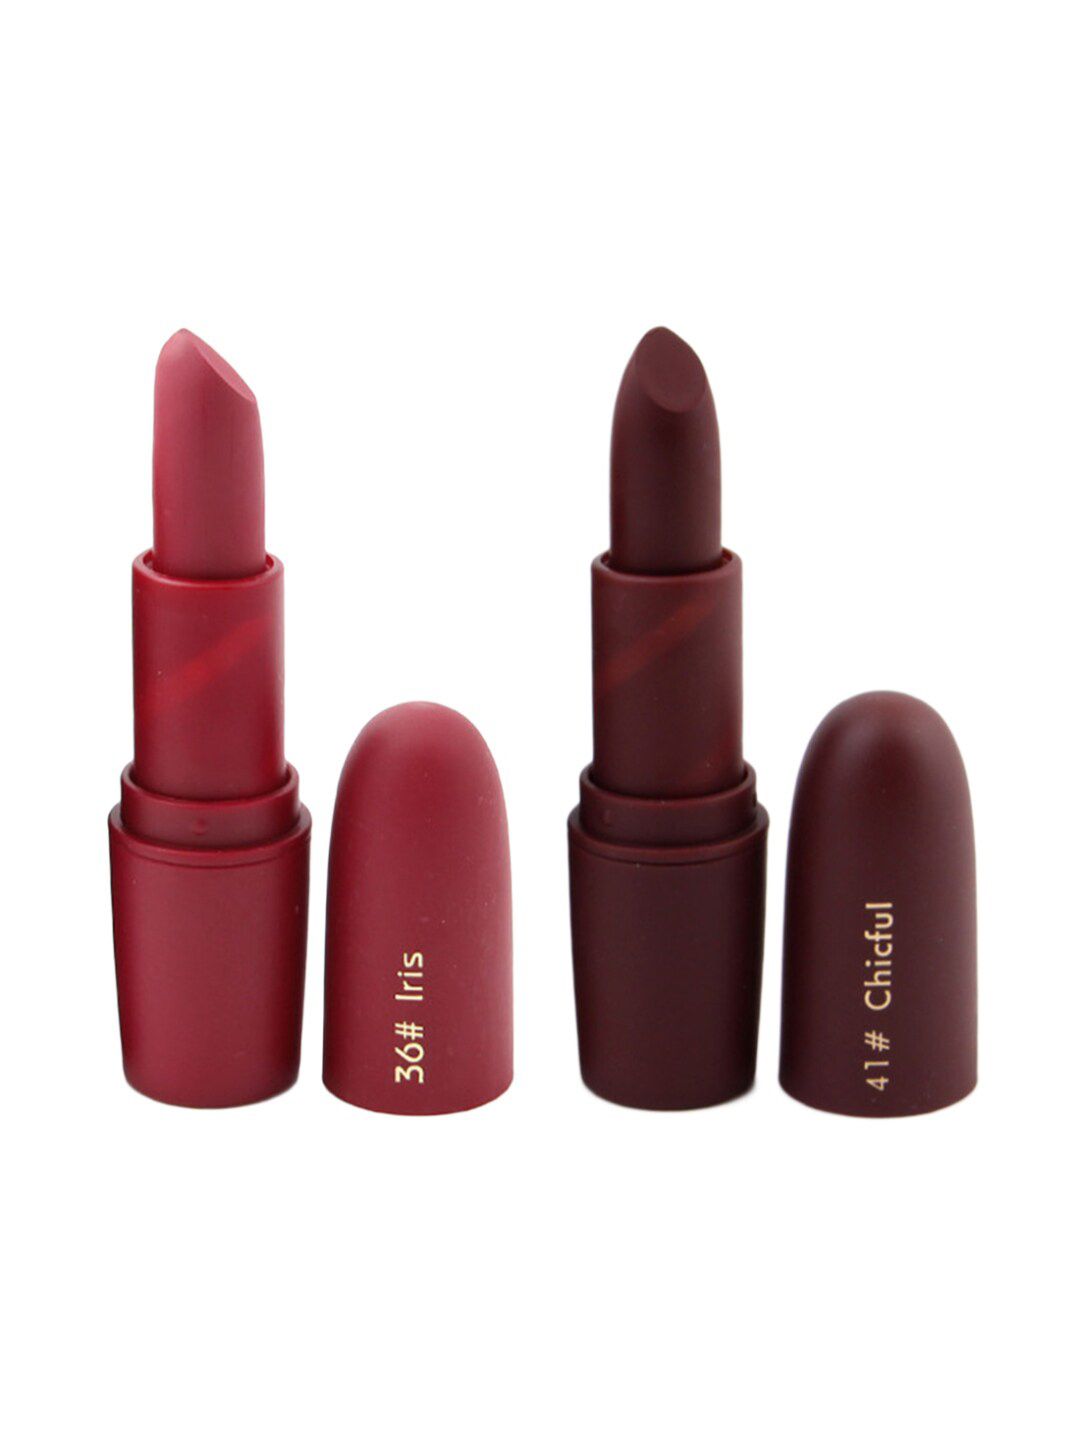 MISS ROSE Professional Make-Up Set of 2 Matte Creamy Lipsticks - Iris 36 & Chicful 41 Price in India